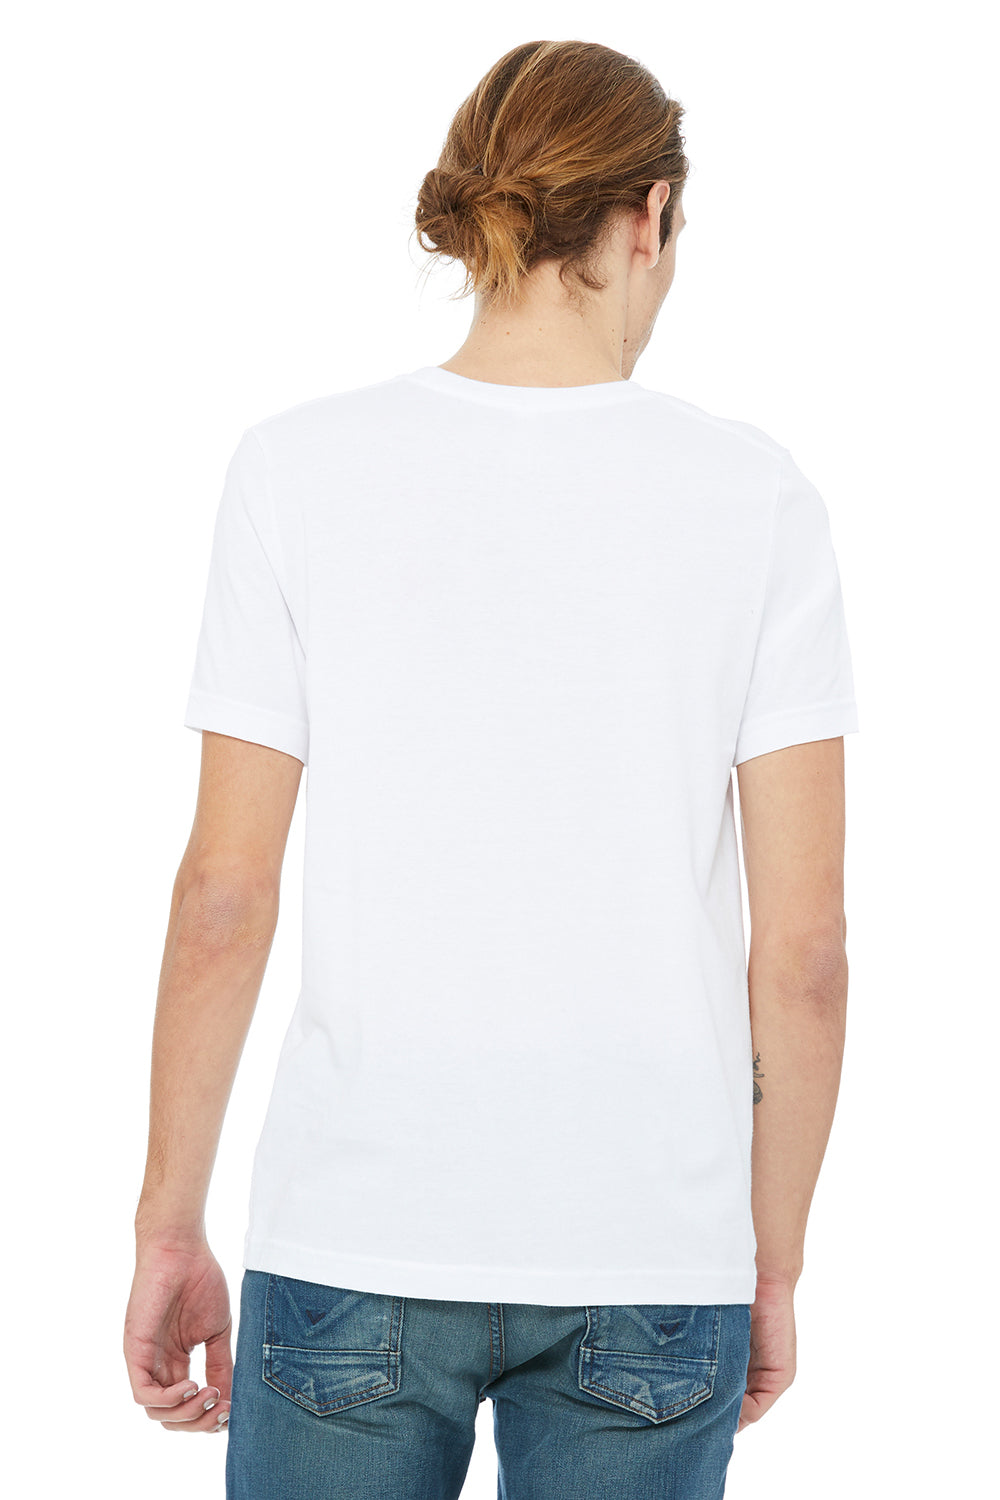 Bella + Canvas 3091 Mens Short Sleeve Crewneck T-Shirt White Back